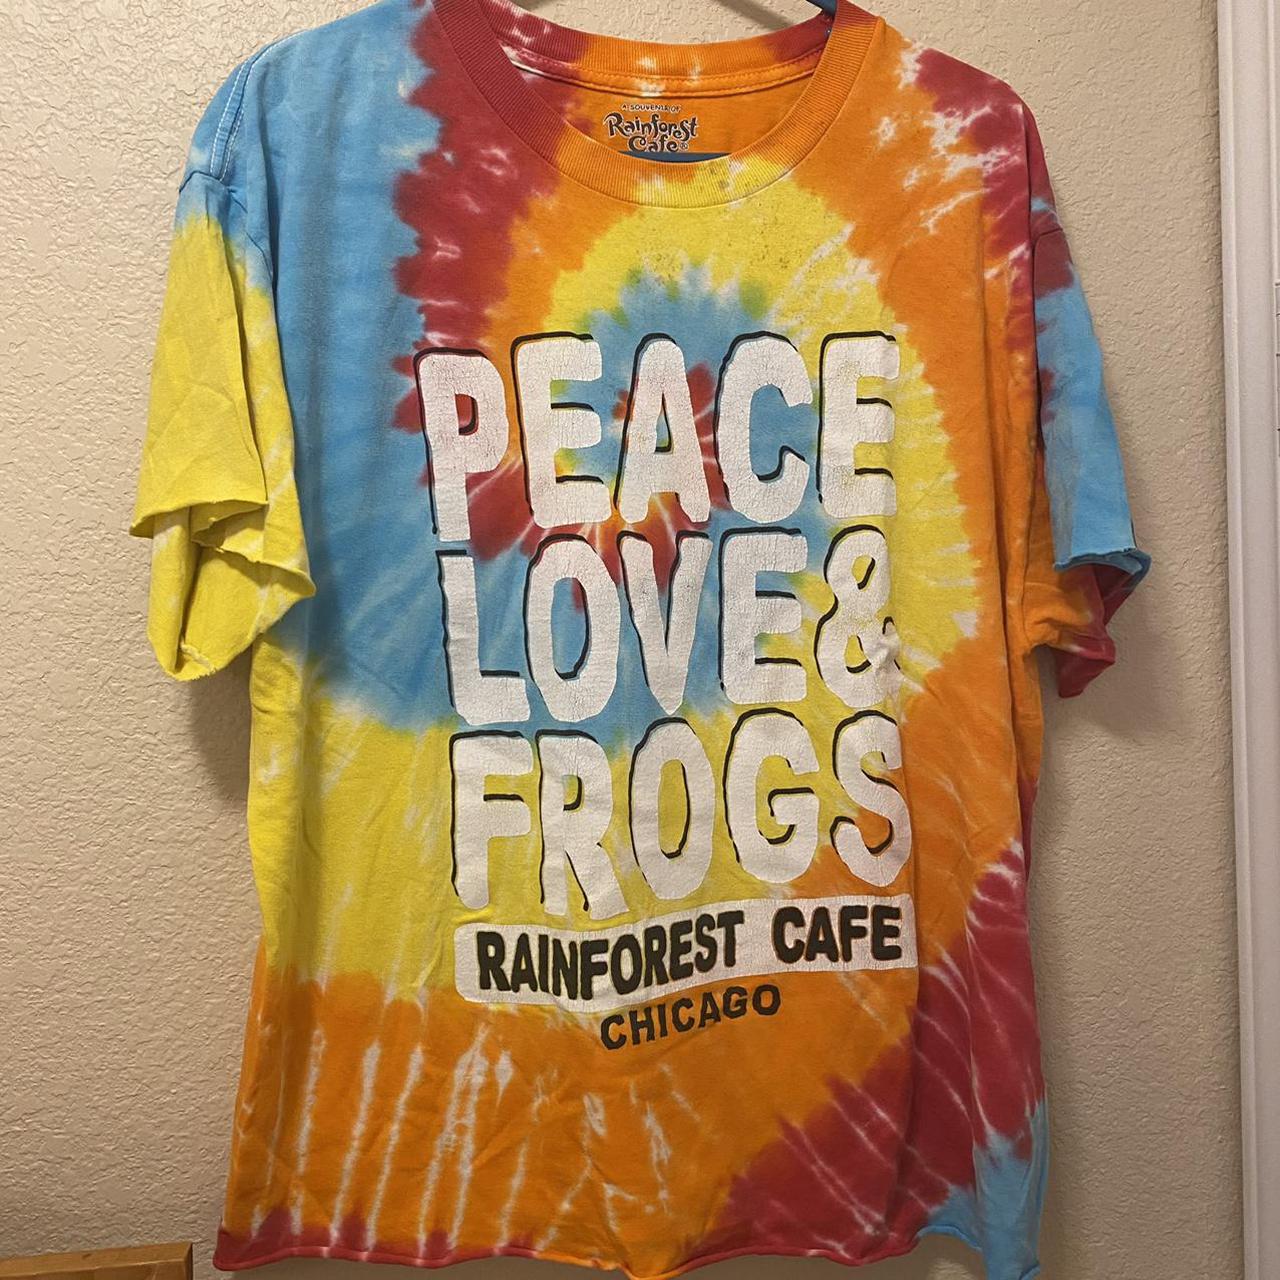 Rainforest Tie-Dye T-Shirt